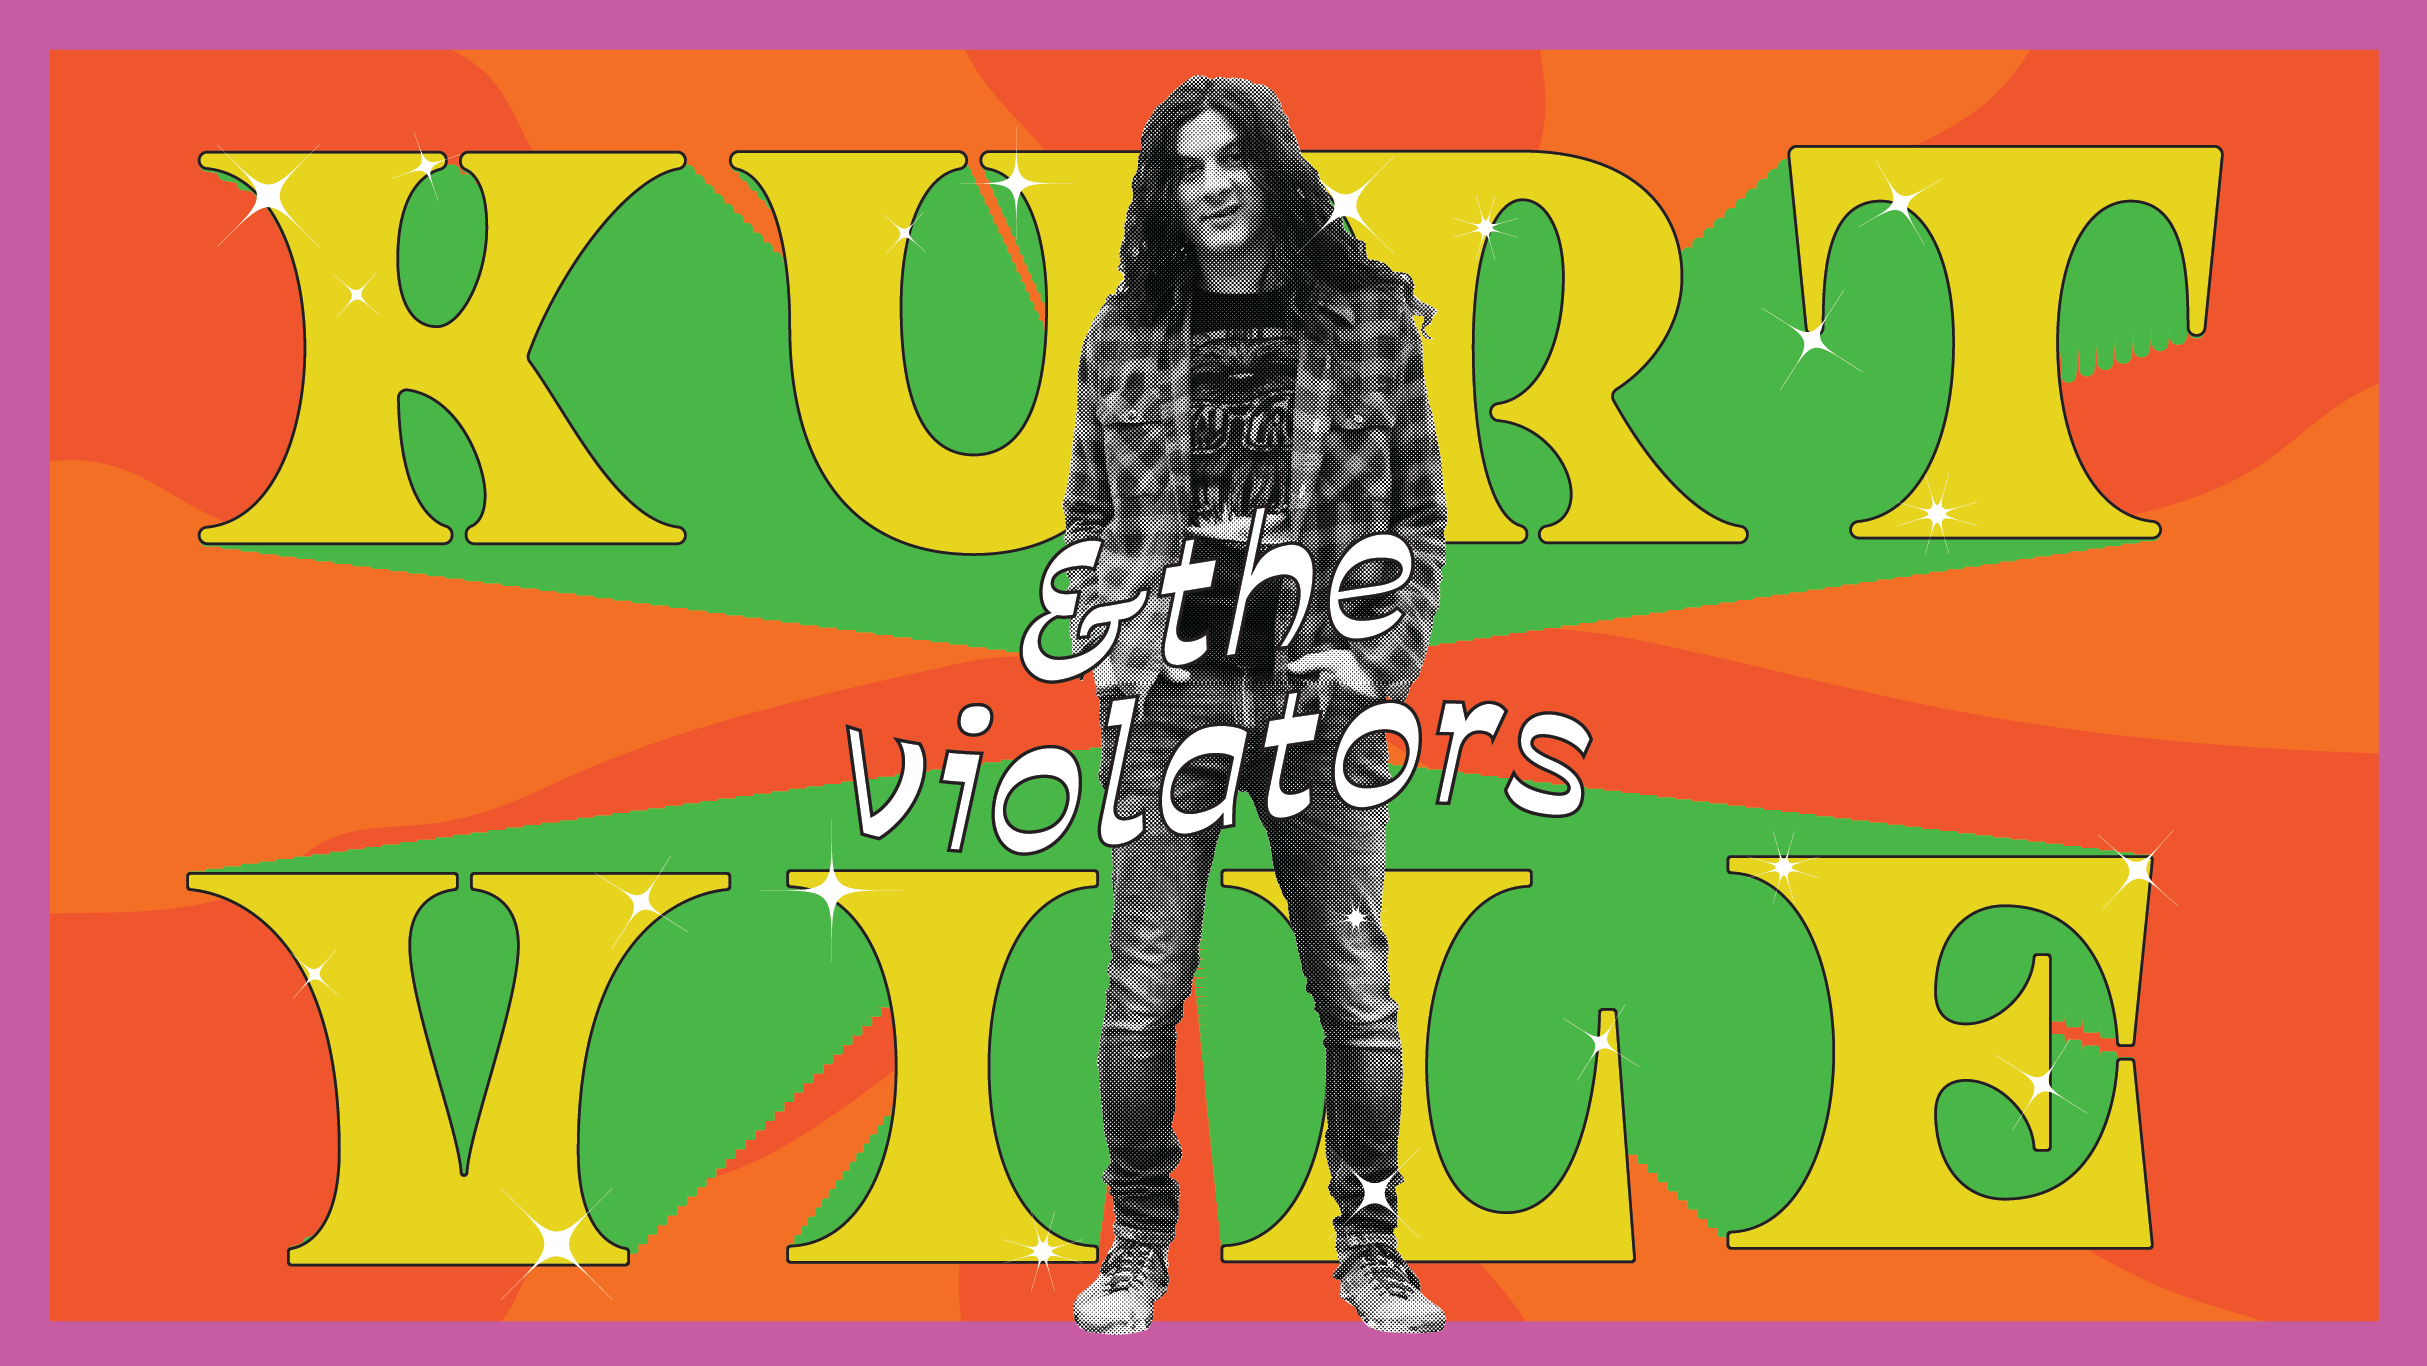 Kurt Vile & The Violators Event Title Pic